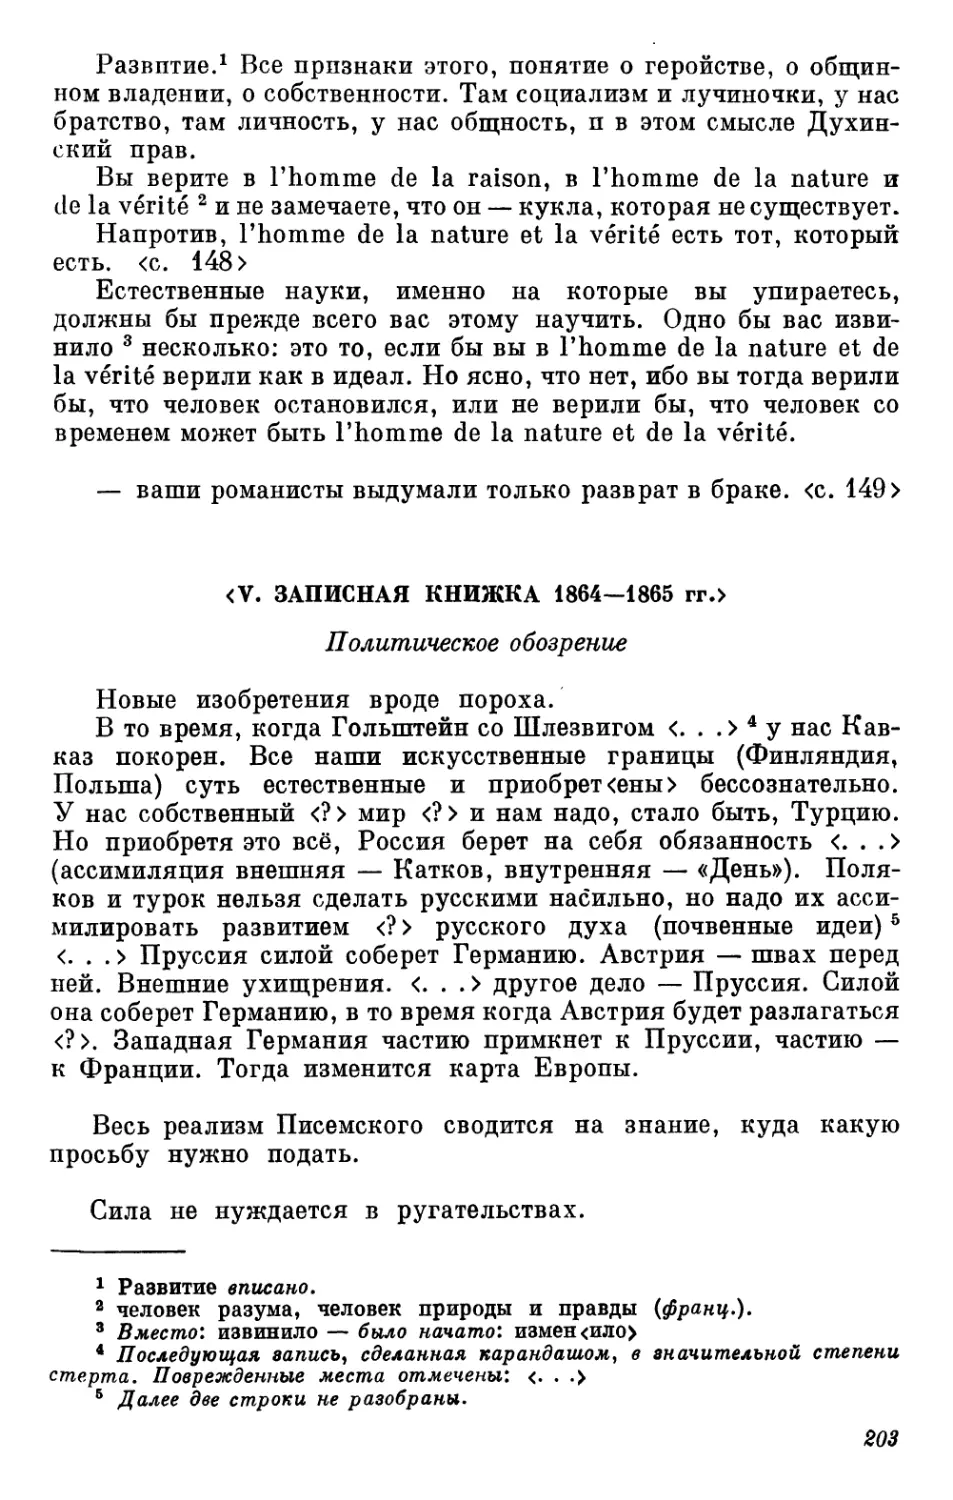 <V. Записная книжка 1864—1865 гг.>